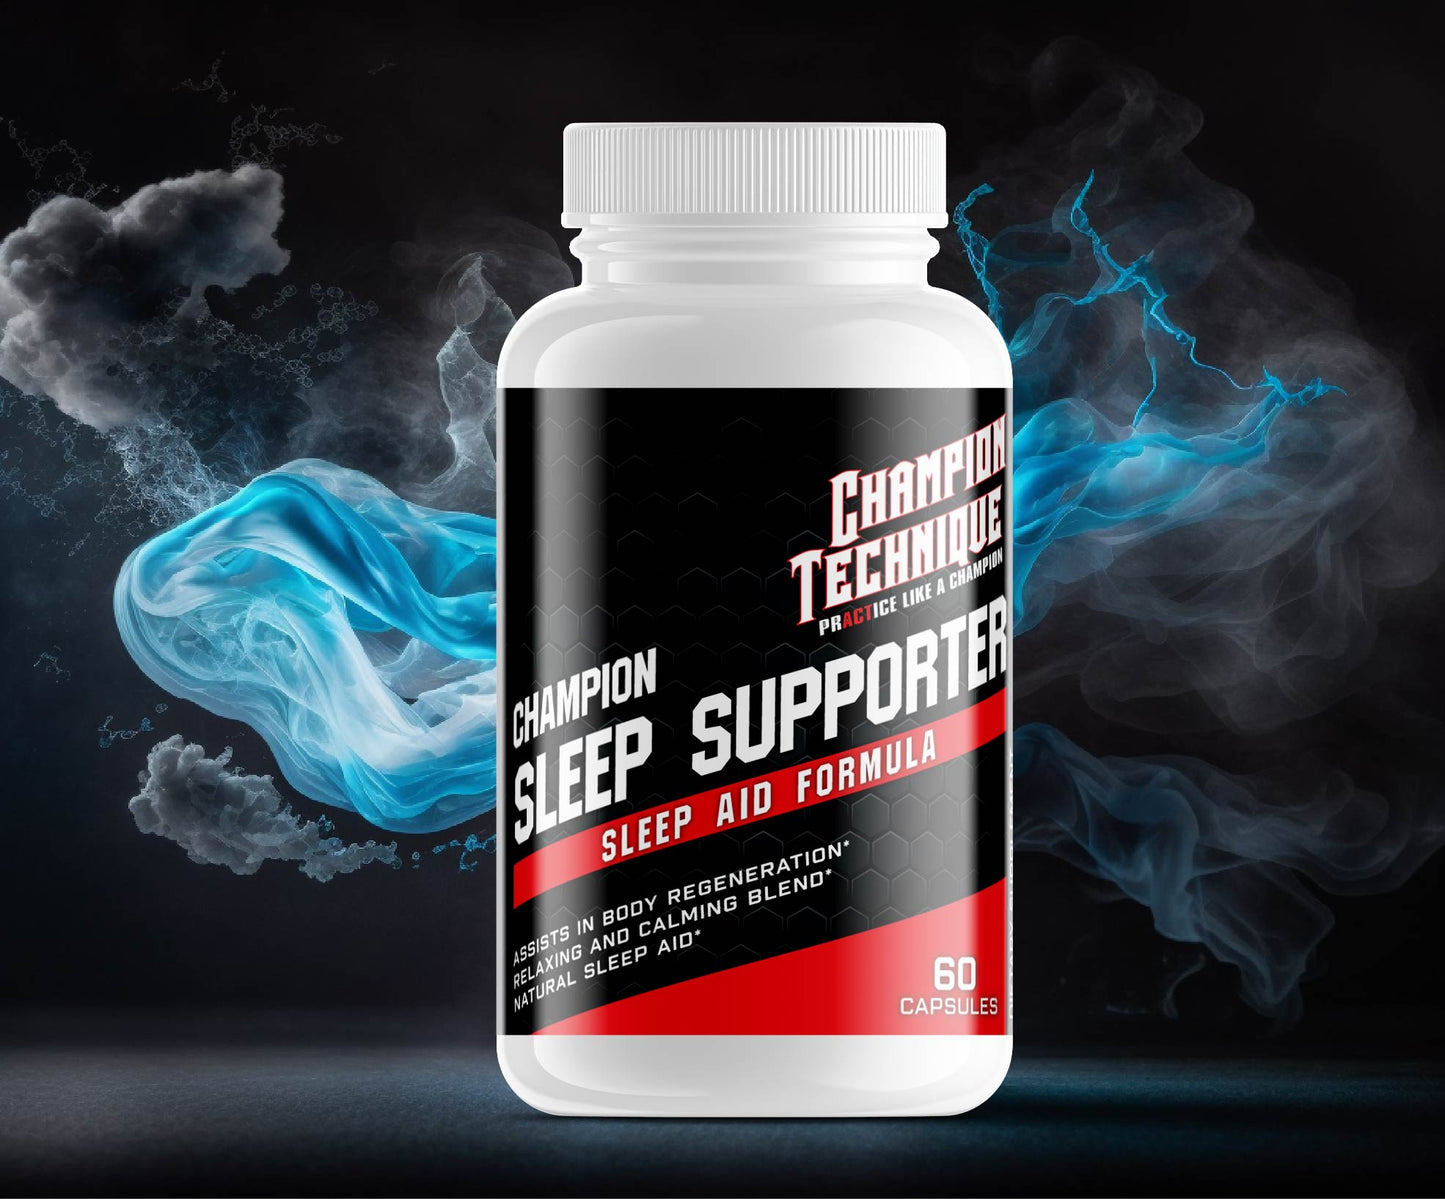 Champion Sleep Supporter